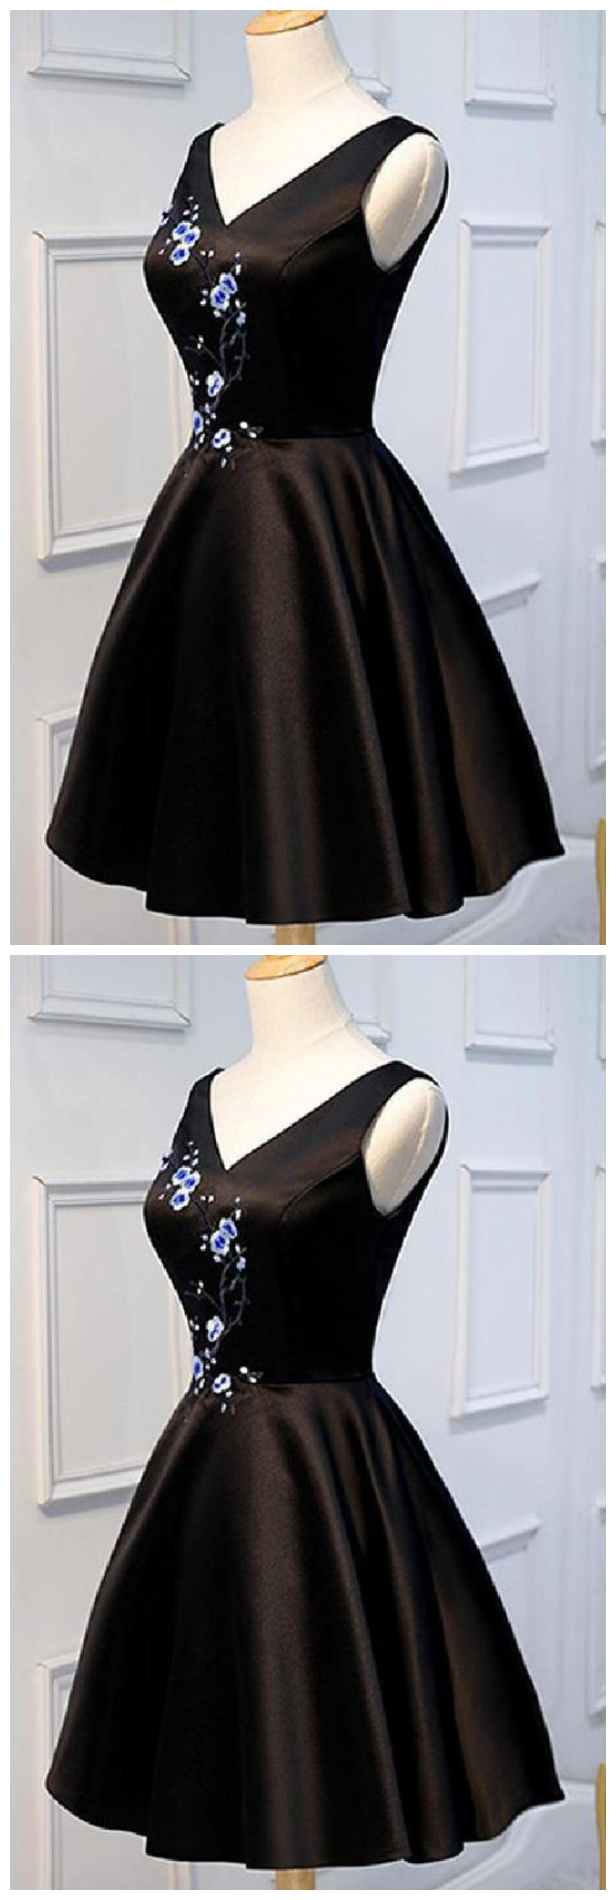 Sleeveless Party Dresses Fashion V Neck Off The Shoulder Sleeveless Black Homecoming Dresses Short Prom Dress